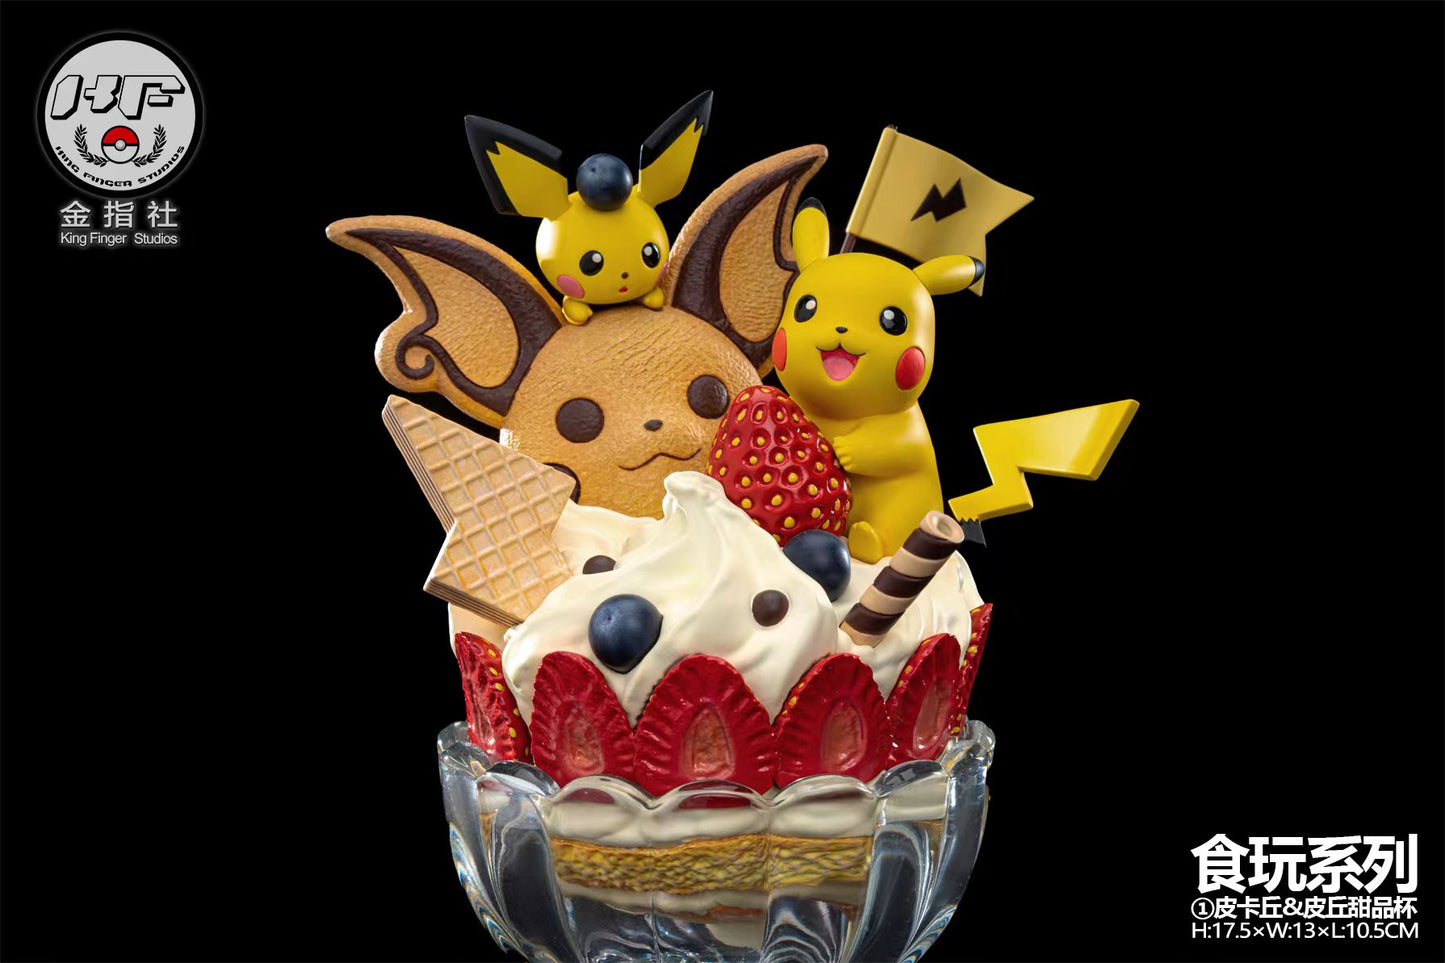 [PREORDER CLOSED] Mini Statue [KING FINGER] - Pikachu & Pichu Dessert